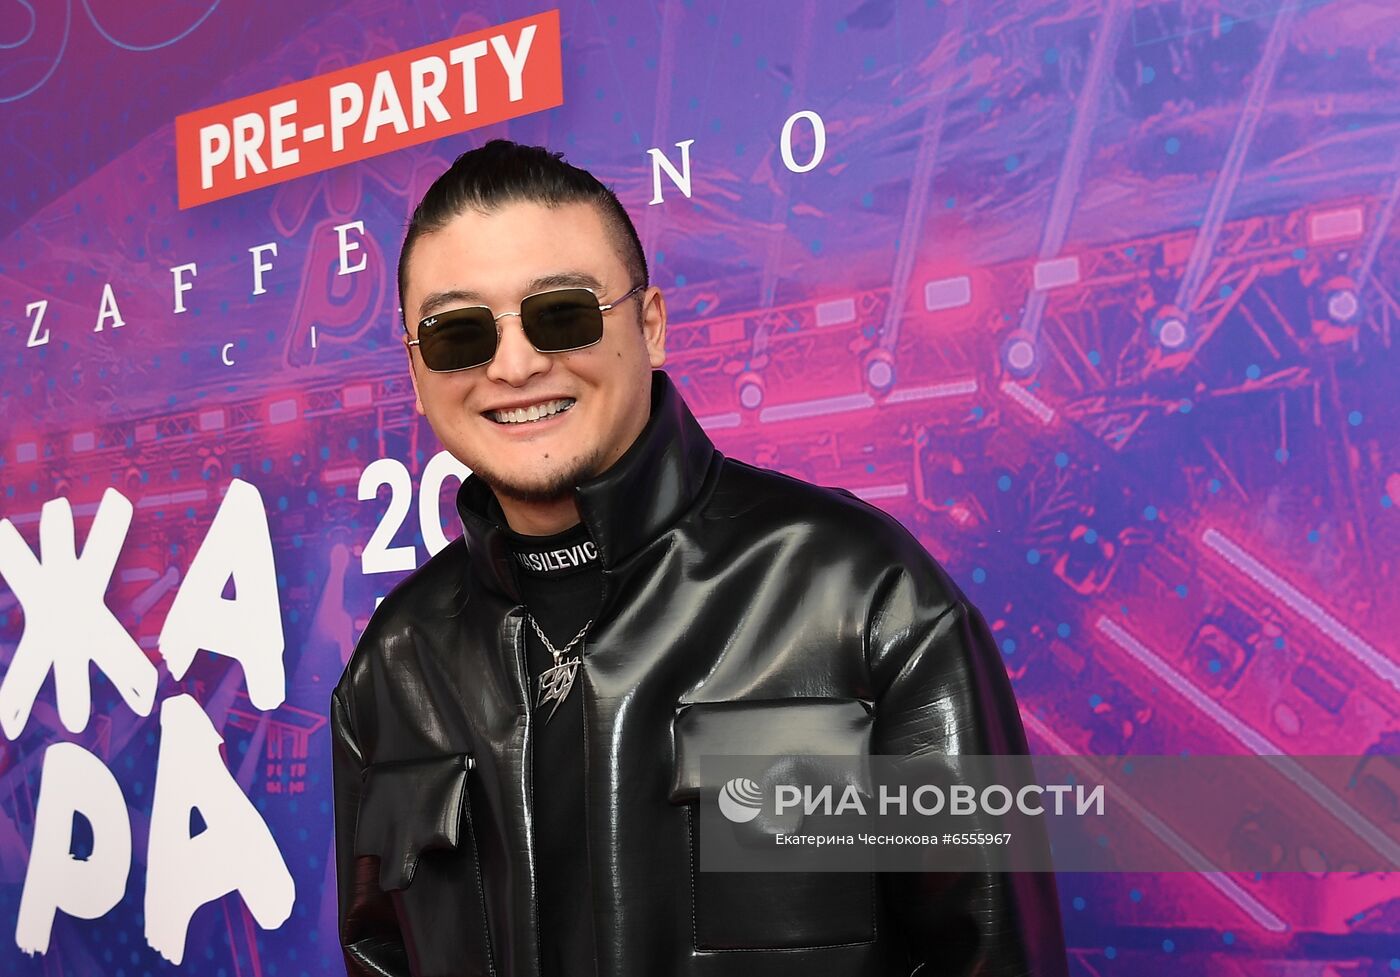 Pre-party международного музыкального фестиваля "Жара"